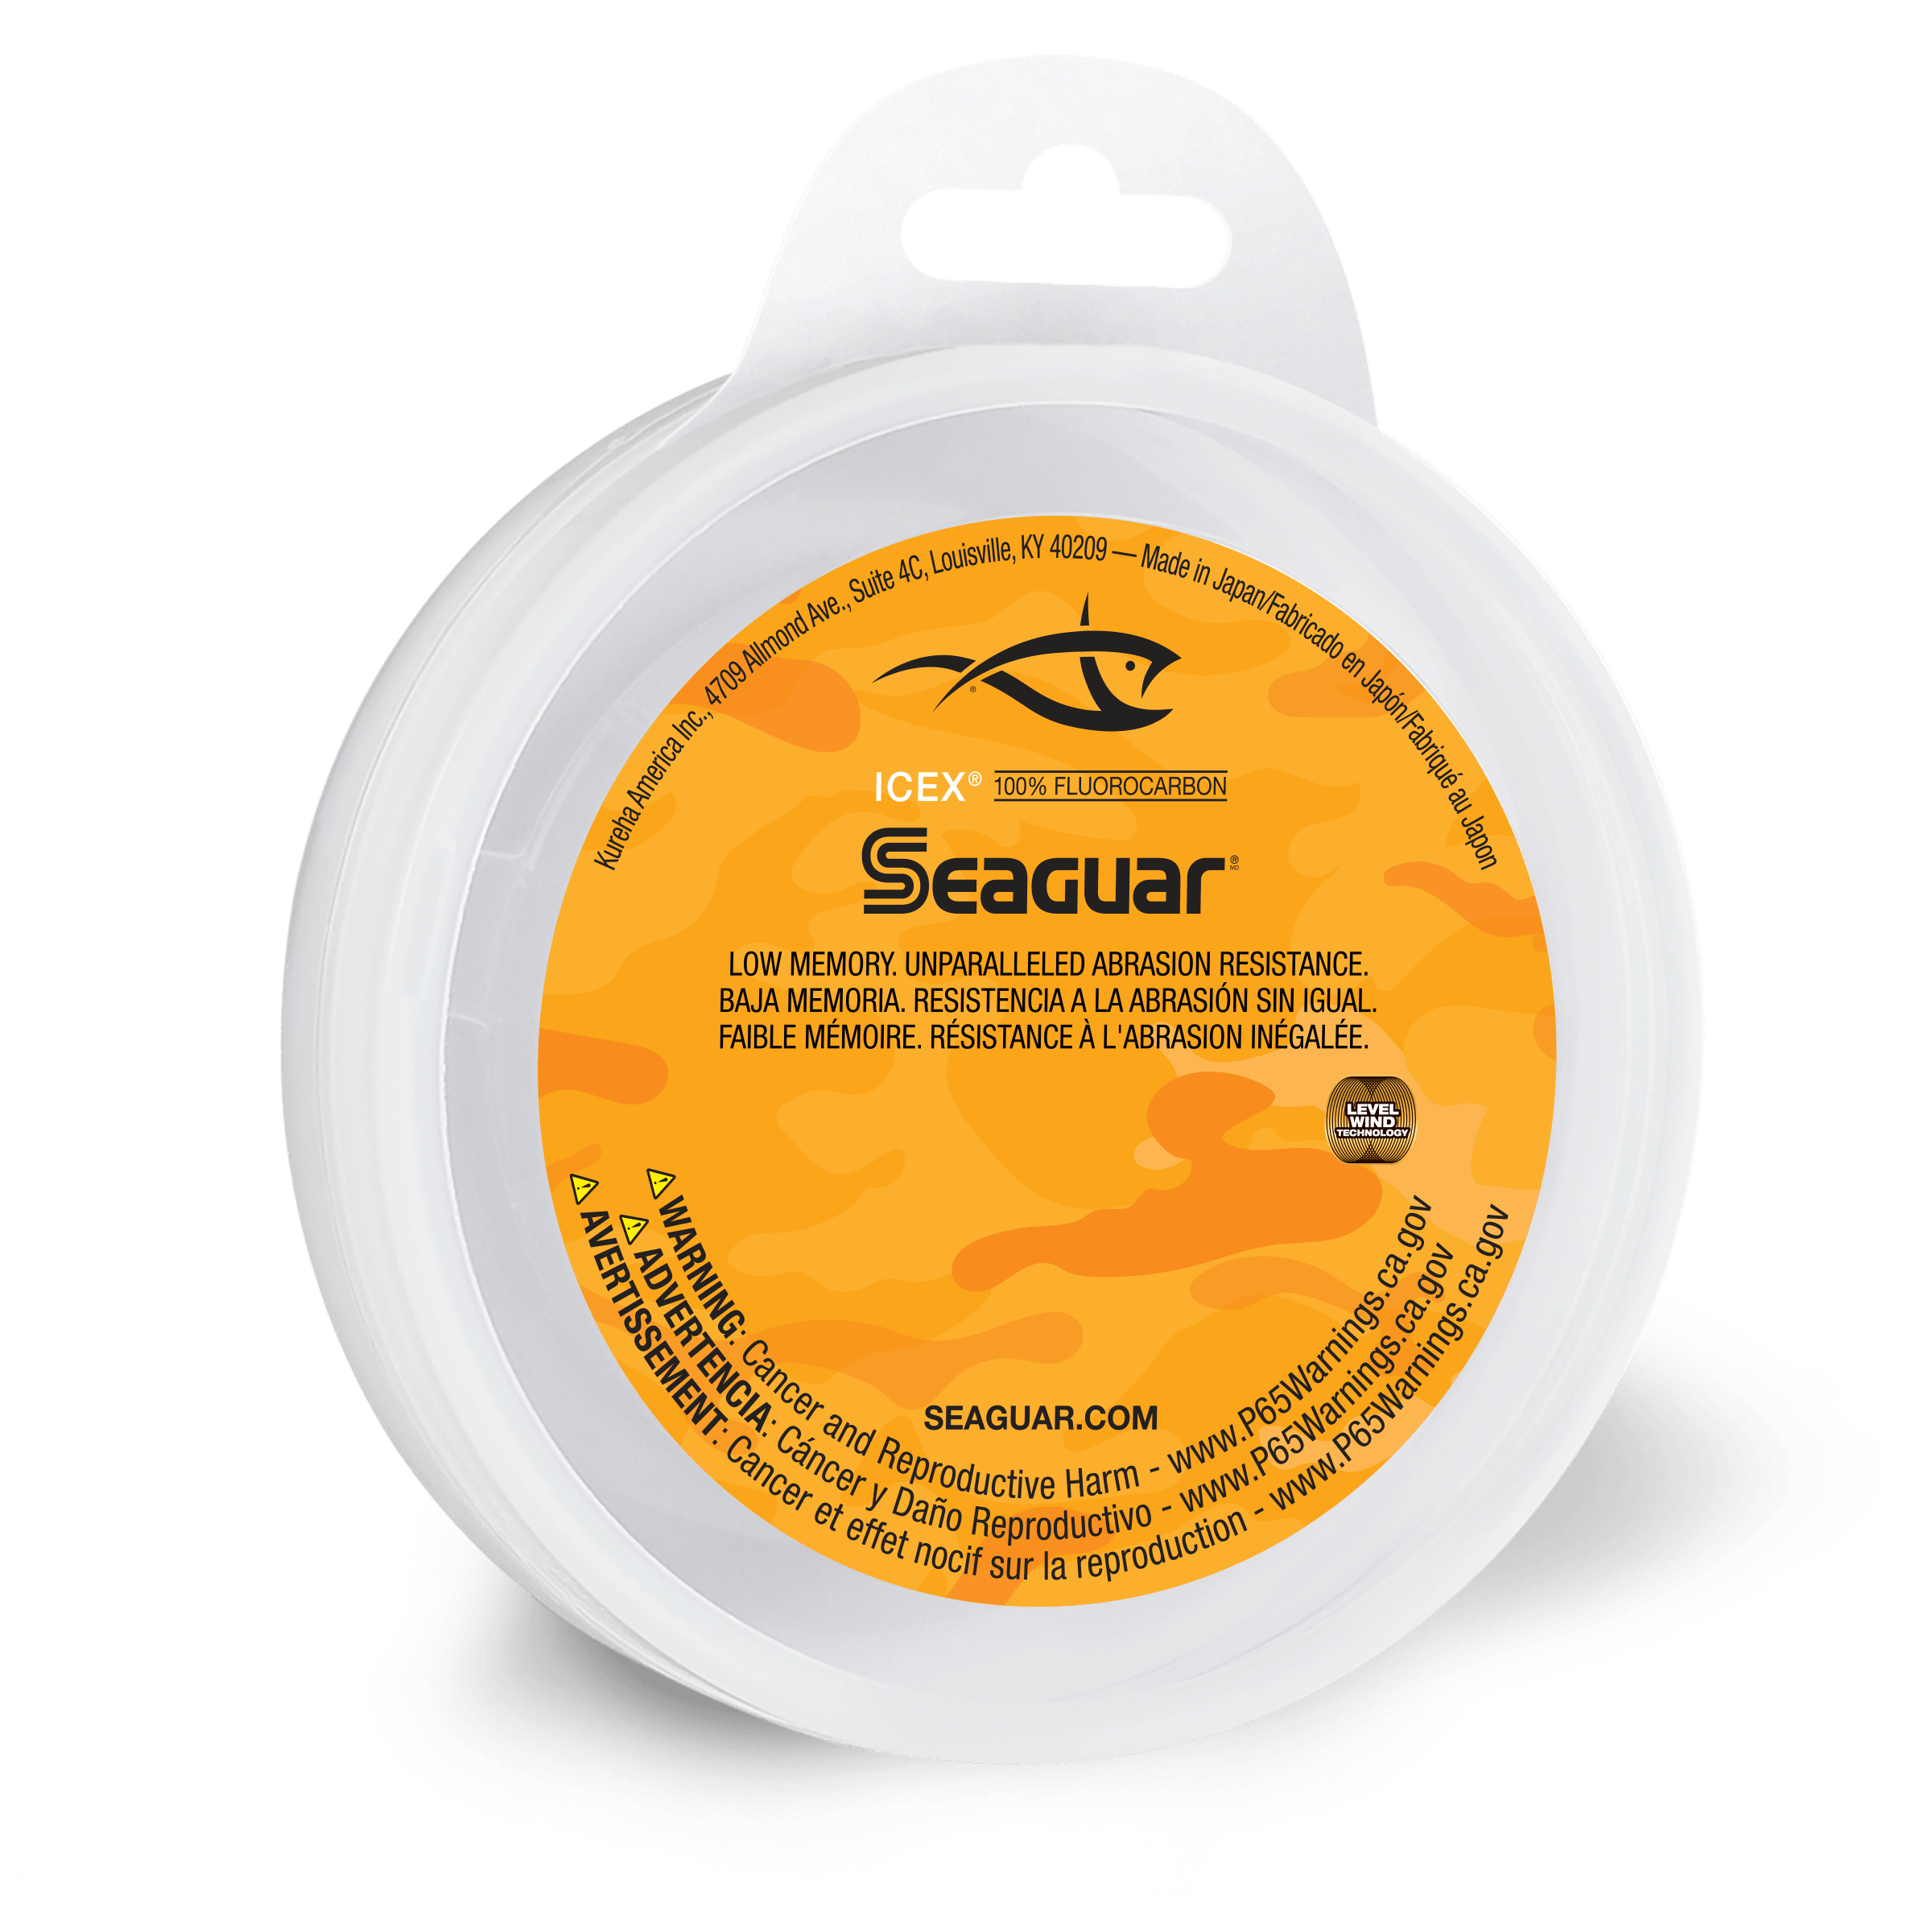 Seaguar InvizX Fluorocarbon Line – Tackle World